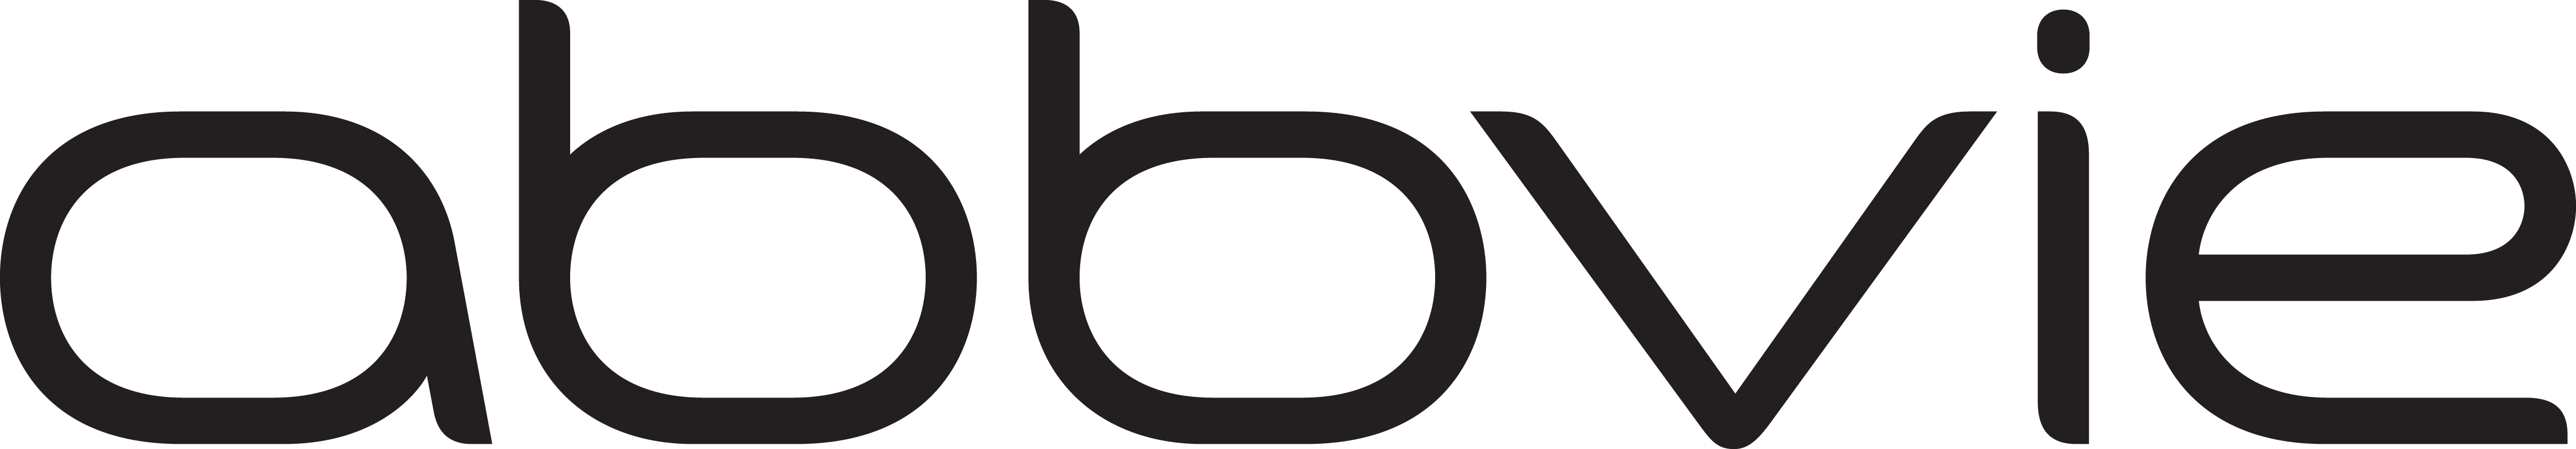 AbbVie Logo